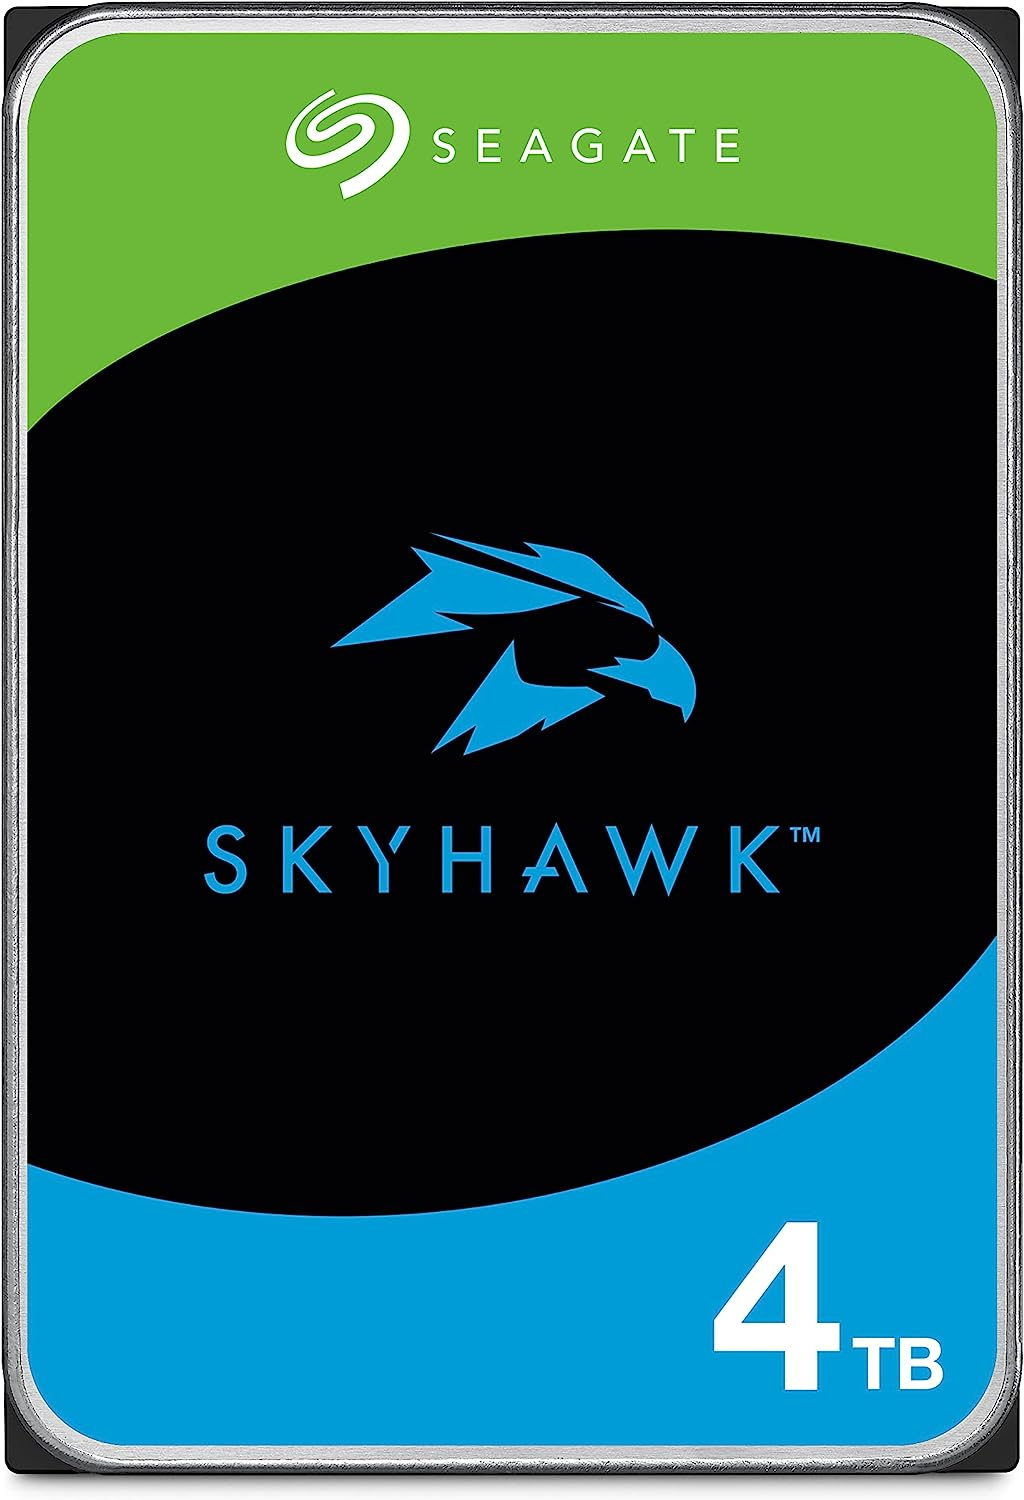   Seagate Skyhawk ST4000VX005,  4,  HDD,  SATA III,  3.5